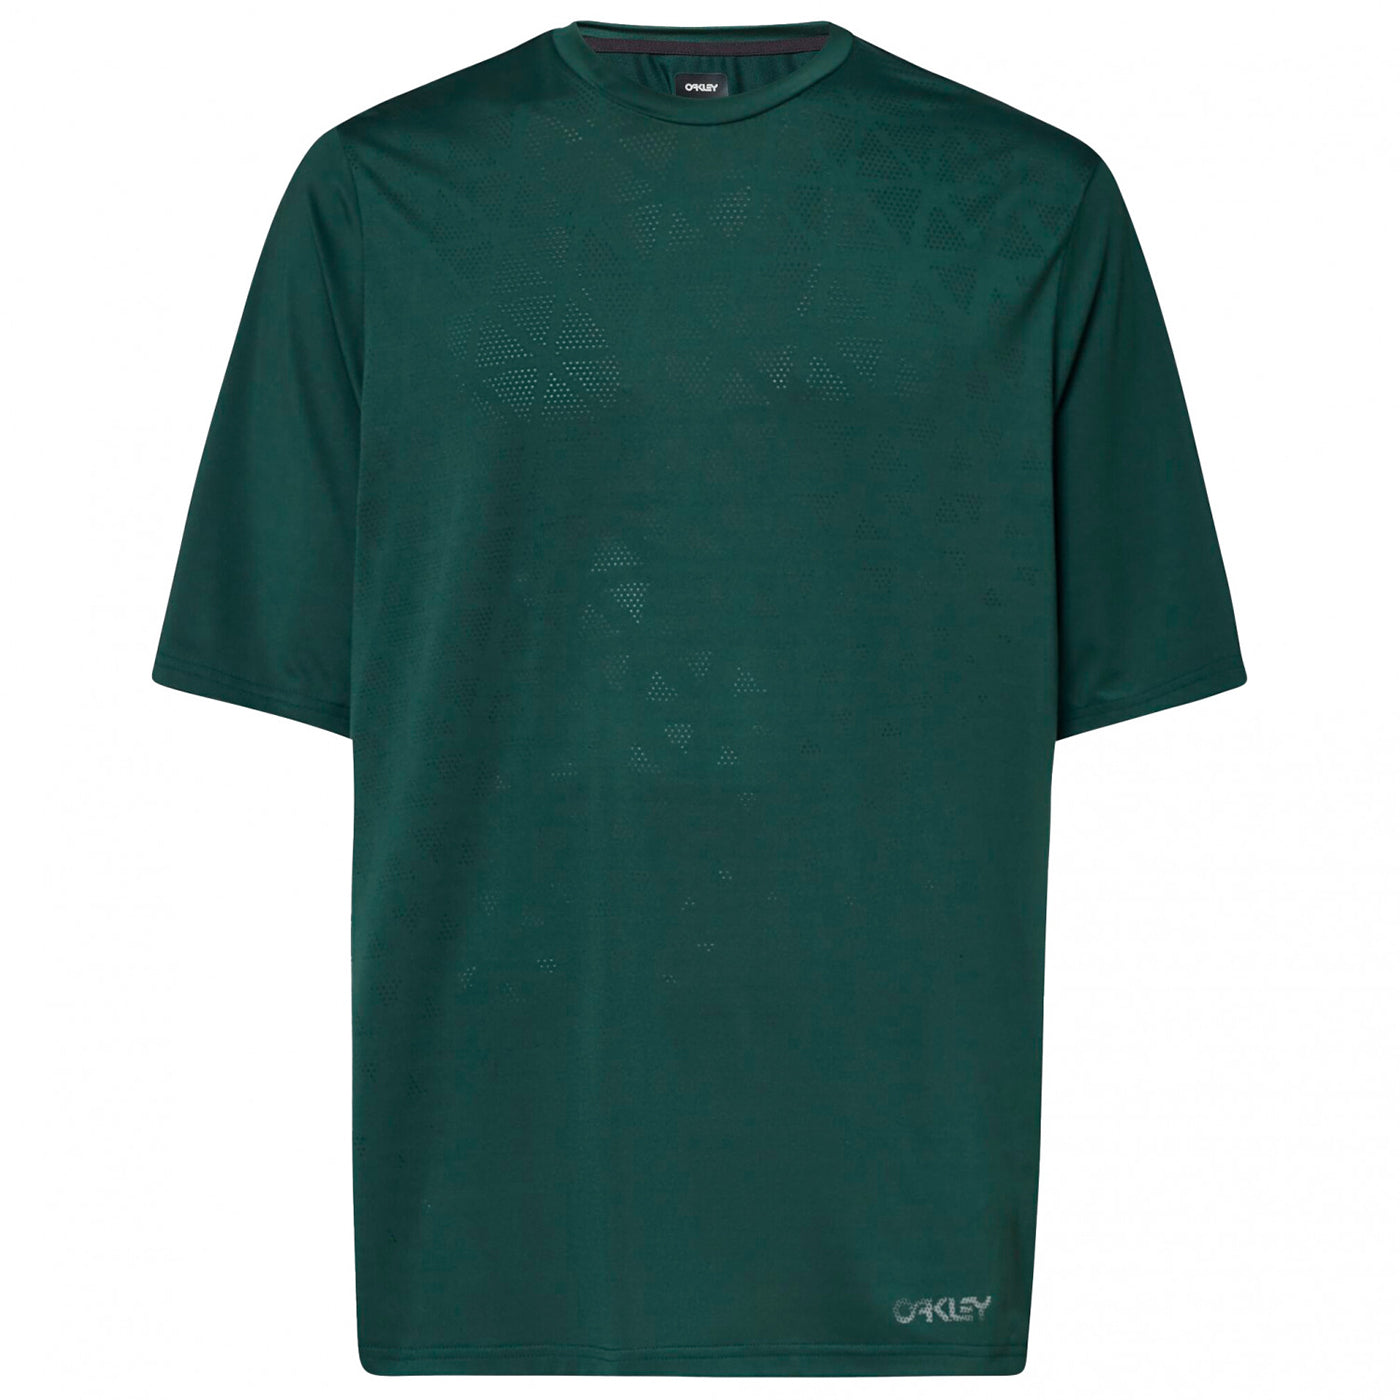 Oakley Berm jersey - Green | All4cycling